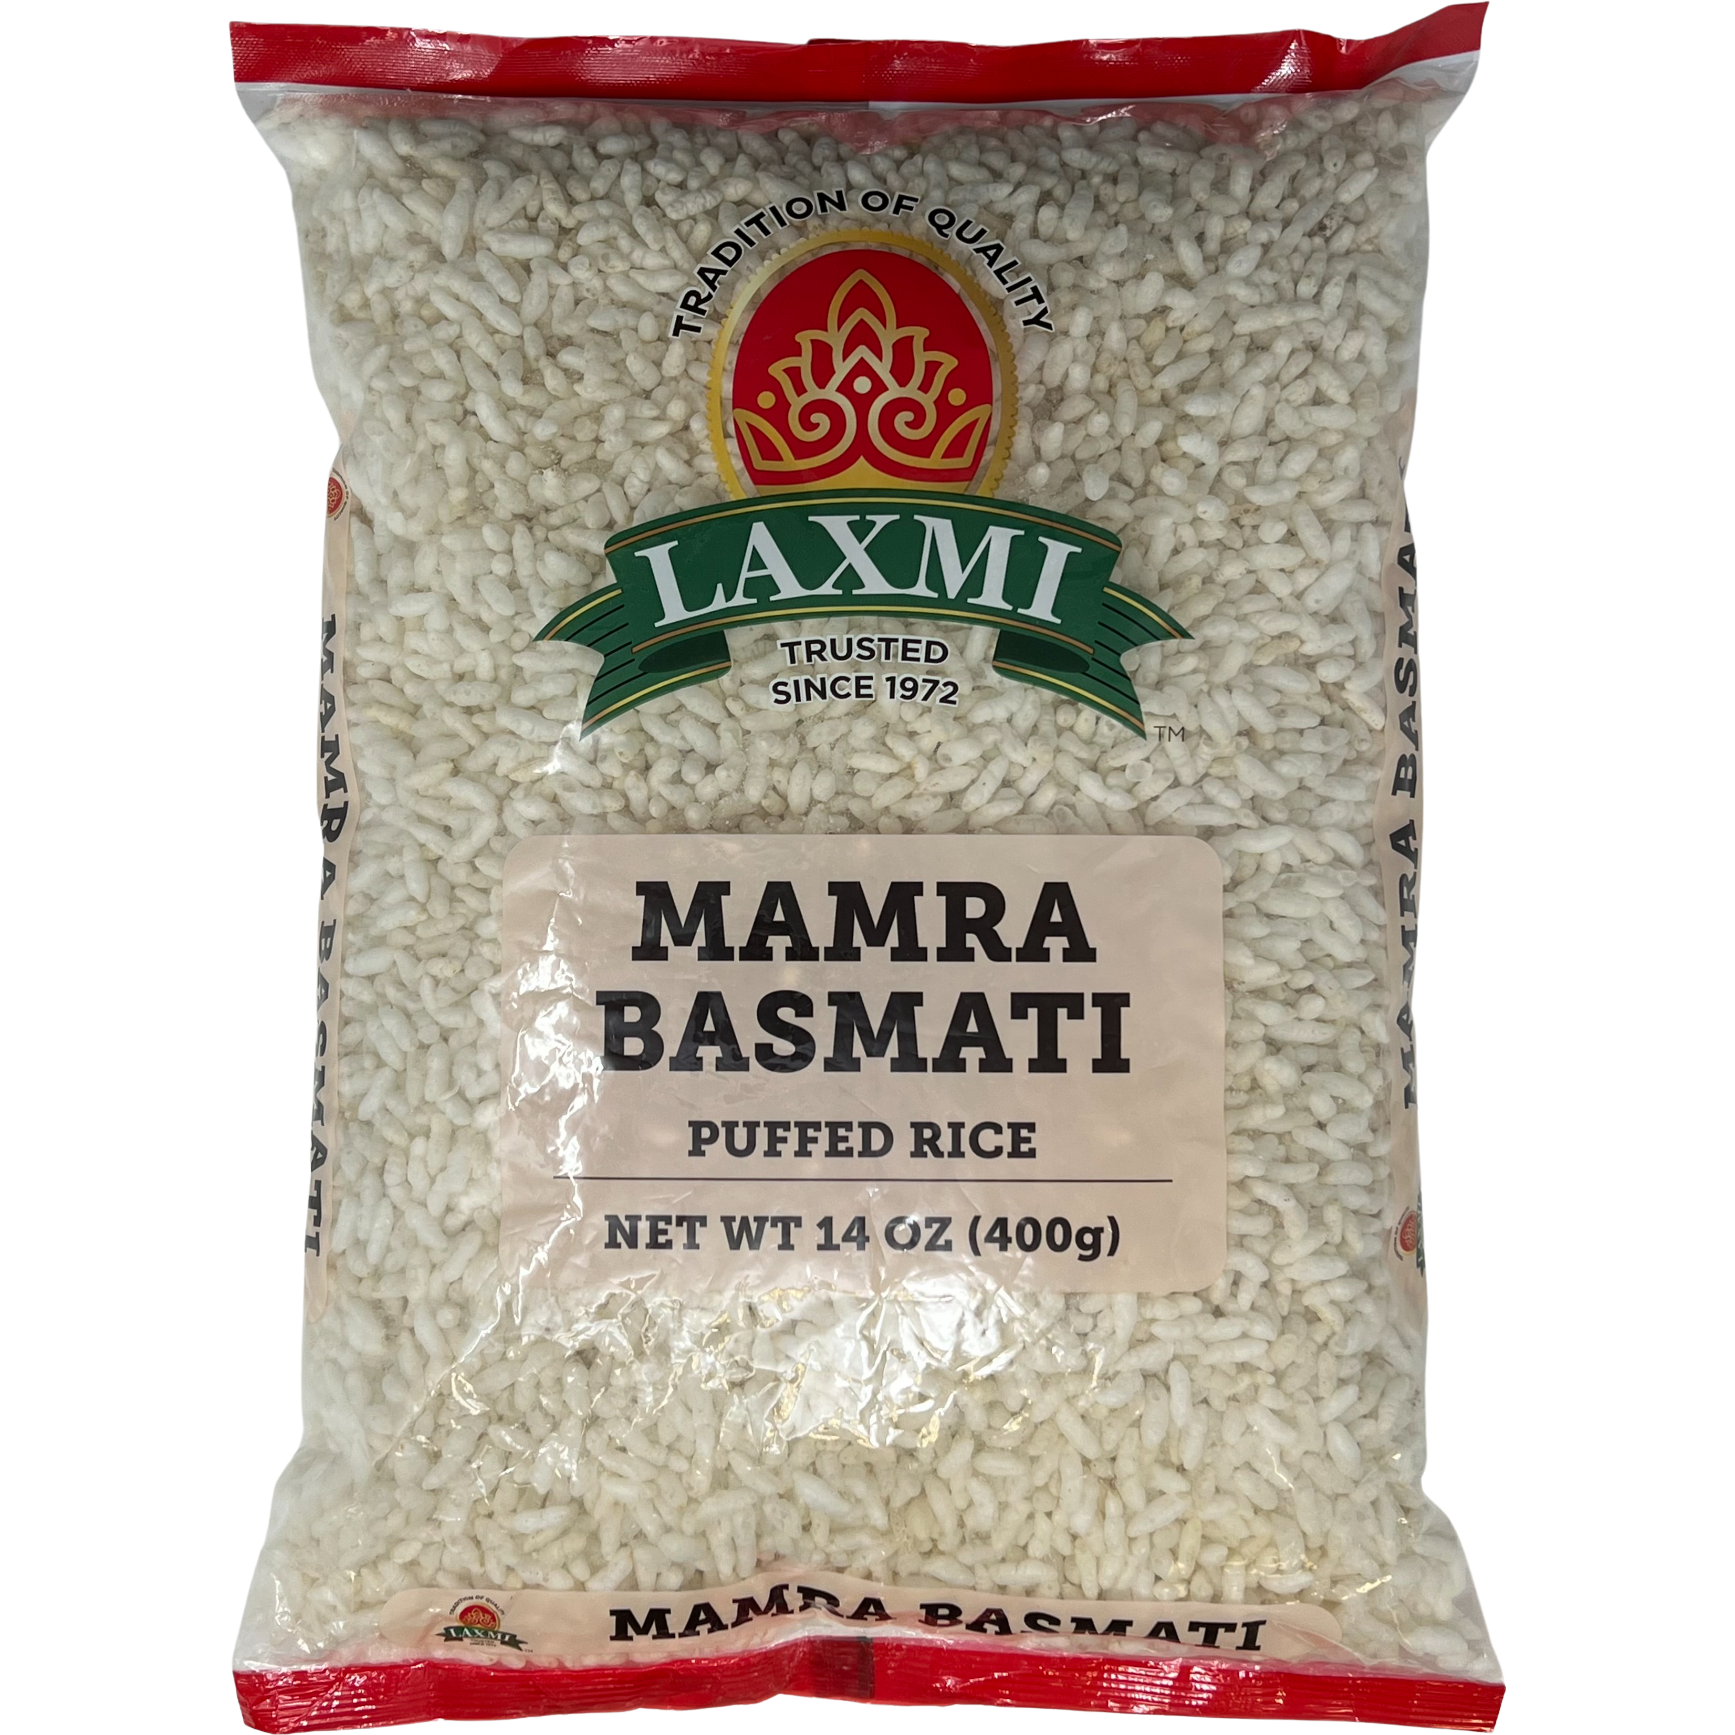 Laxmi Mamra Basmati Puffed Rice